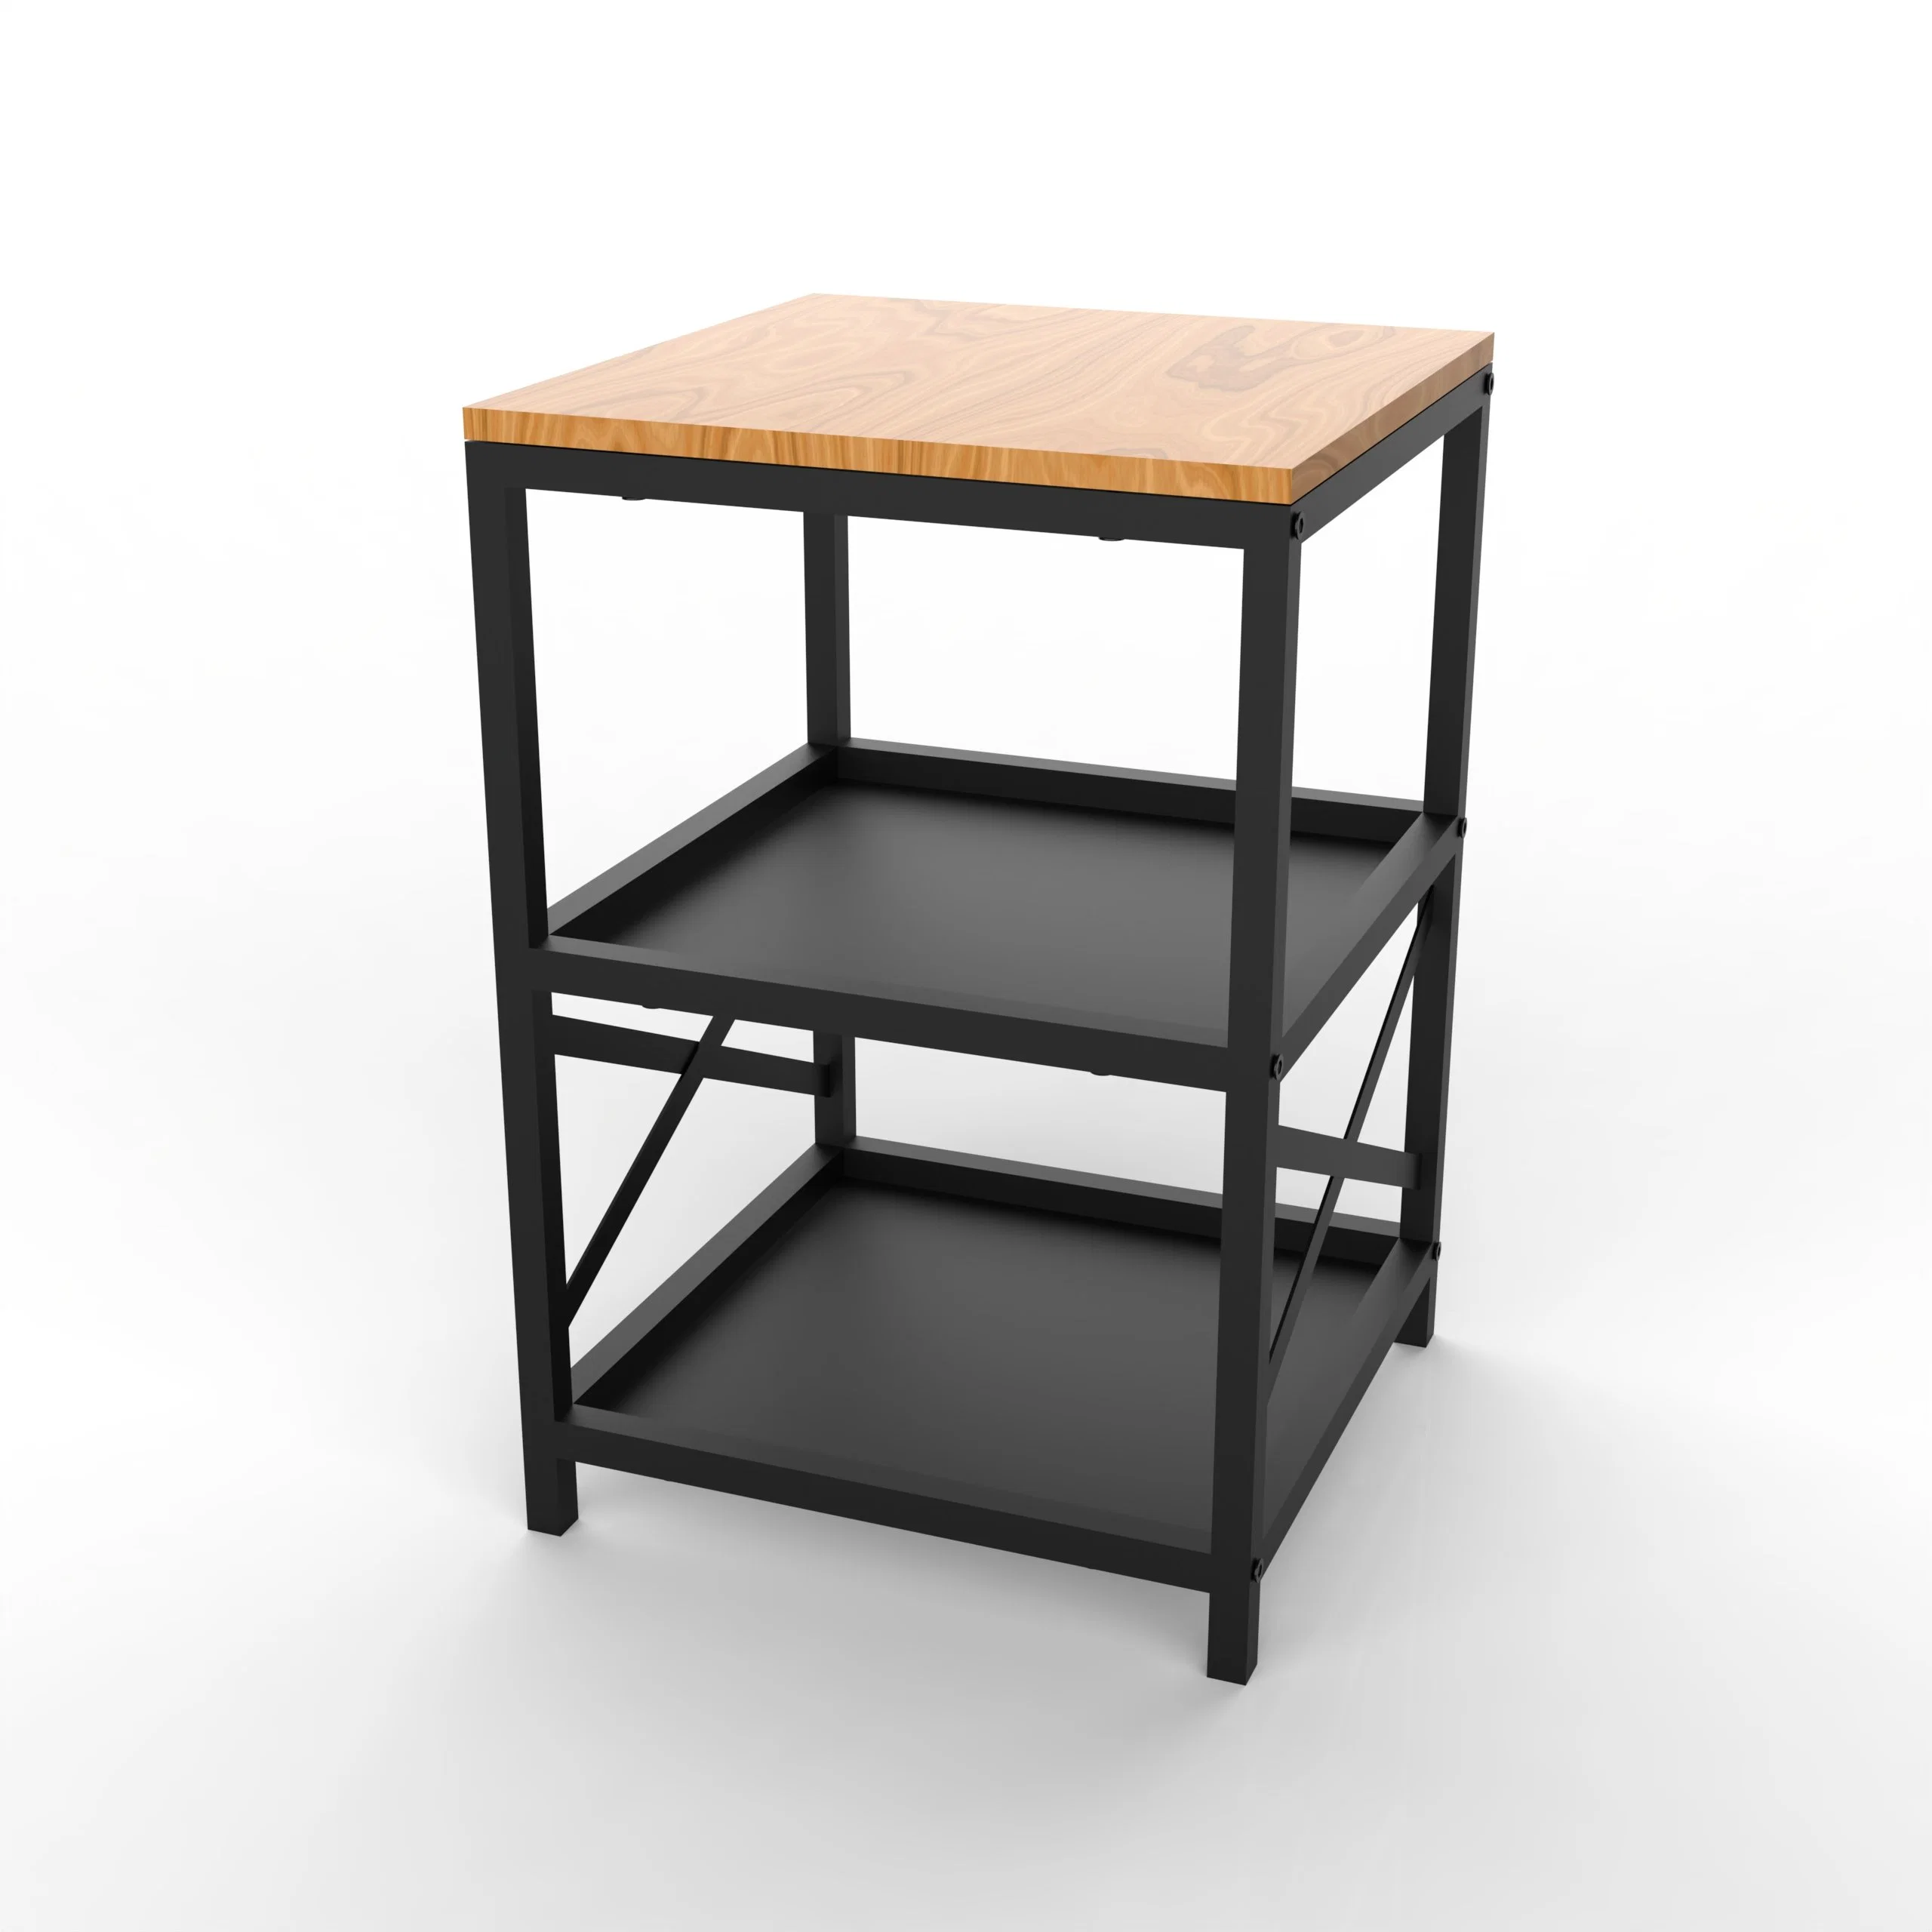 Modern Furniture Metal Shelving Side Table Use Storage Shelves